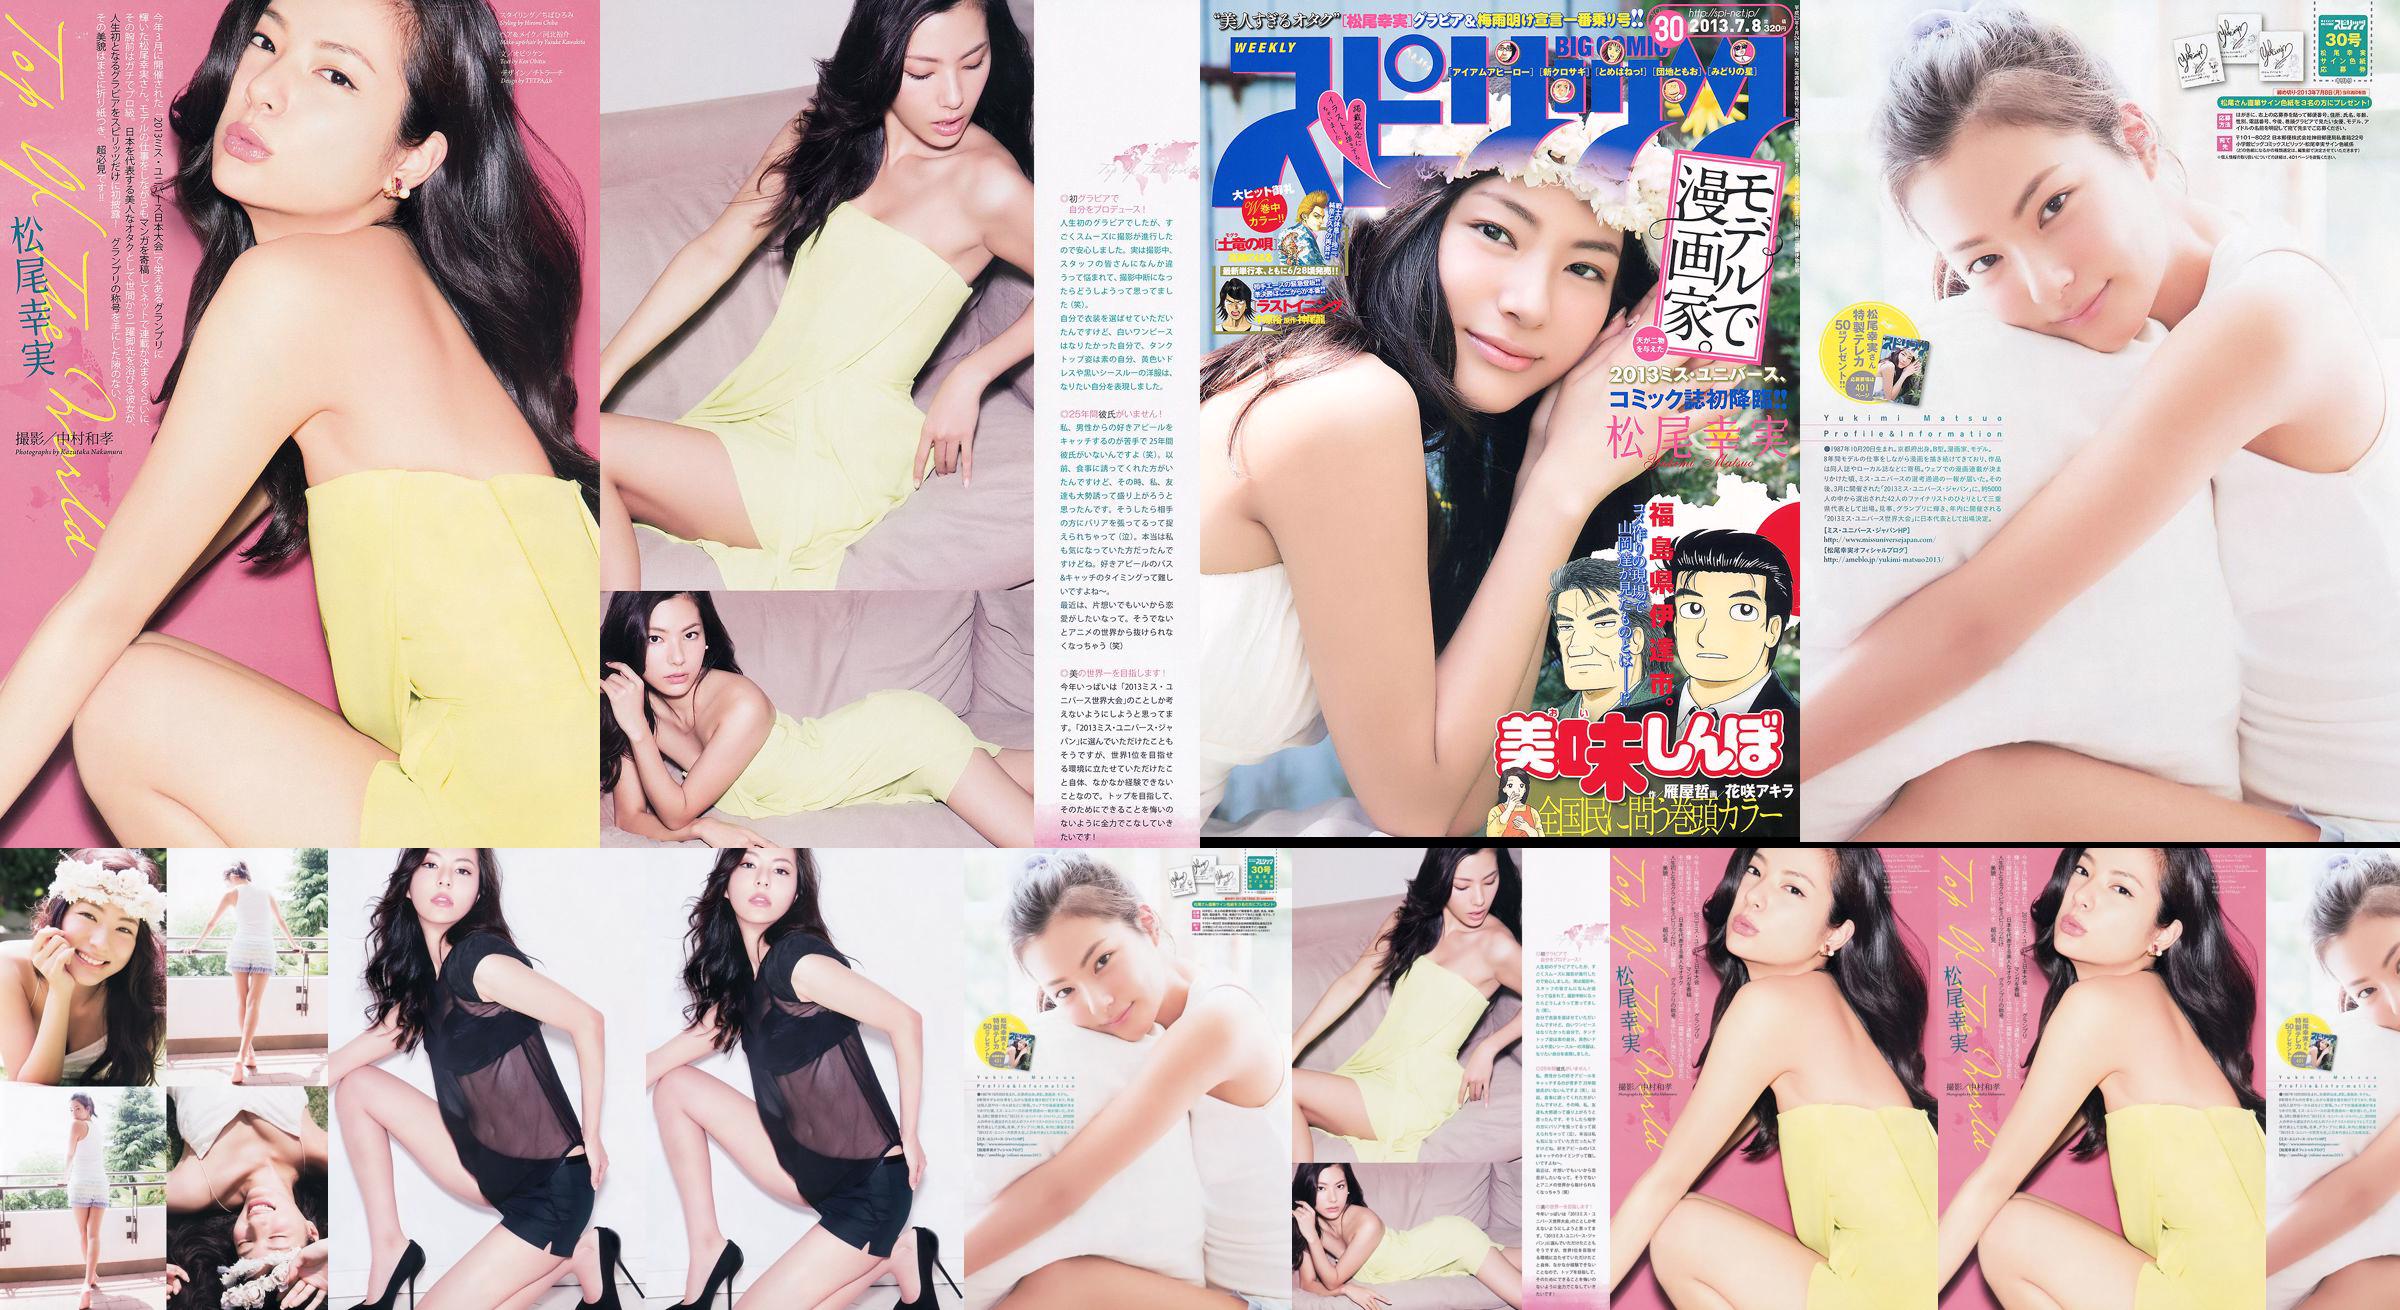 [Grands esprits de la bande dessinée hebdomadaire] Komi Matsuo 2013 No.30 Photo Magazine No.0d2e19 Page 2